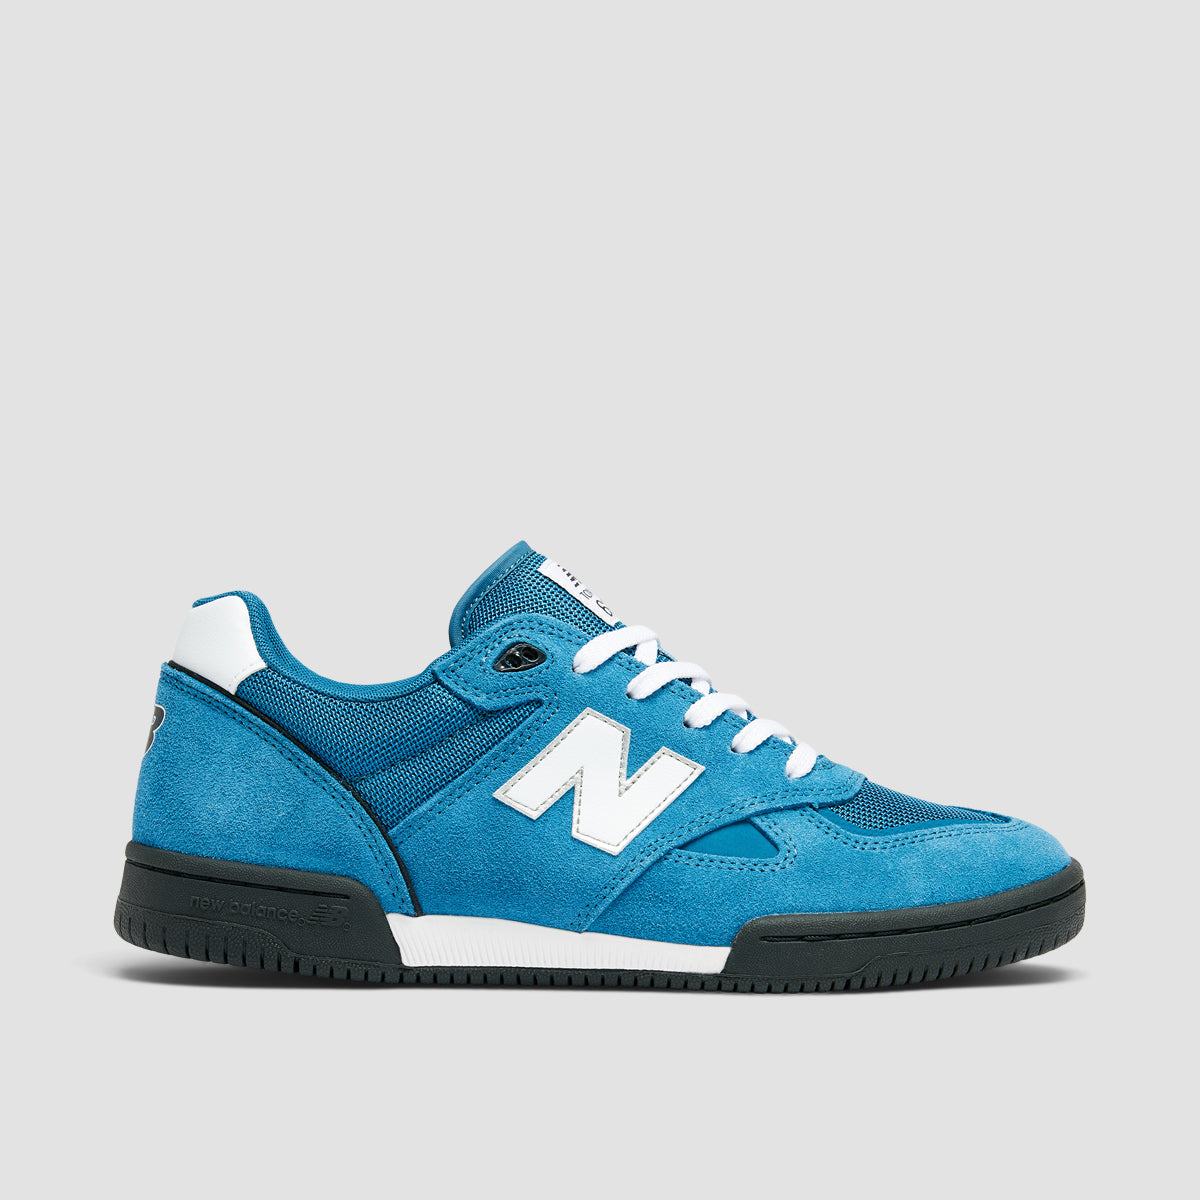 New Balance Numeric 600 Tom Knox Shoes - Elemental Blue/White